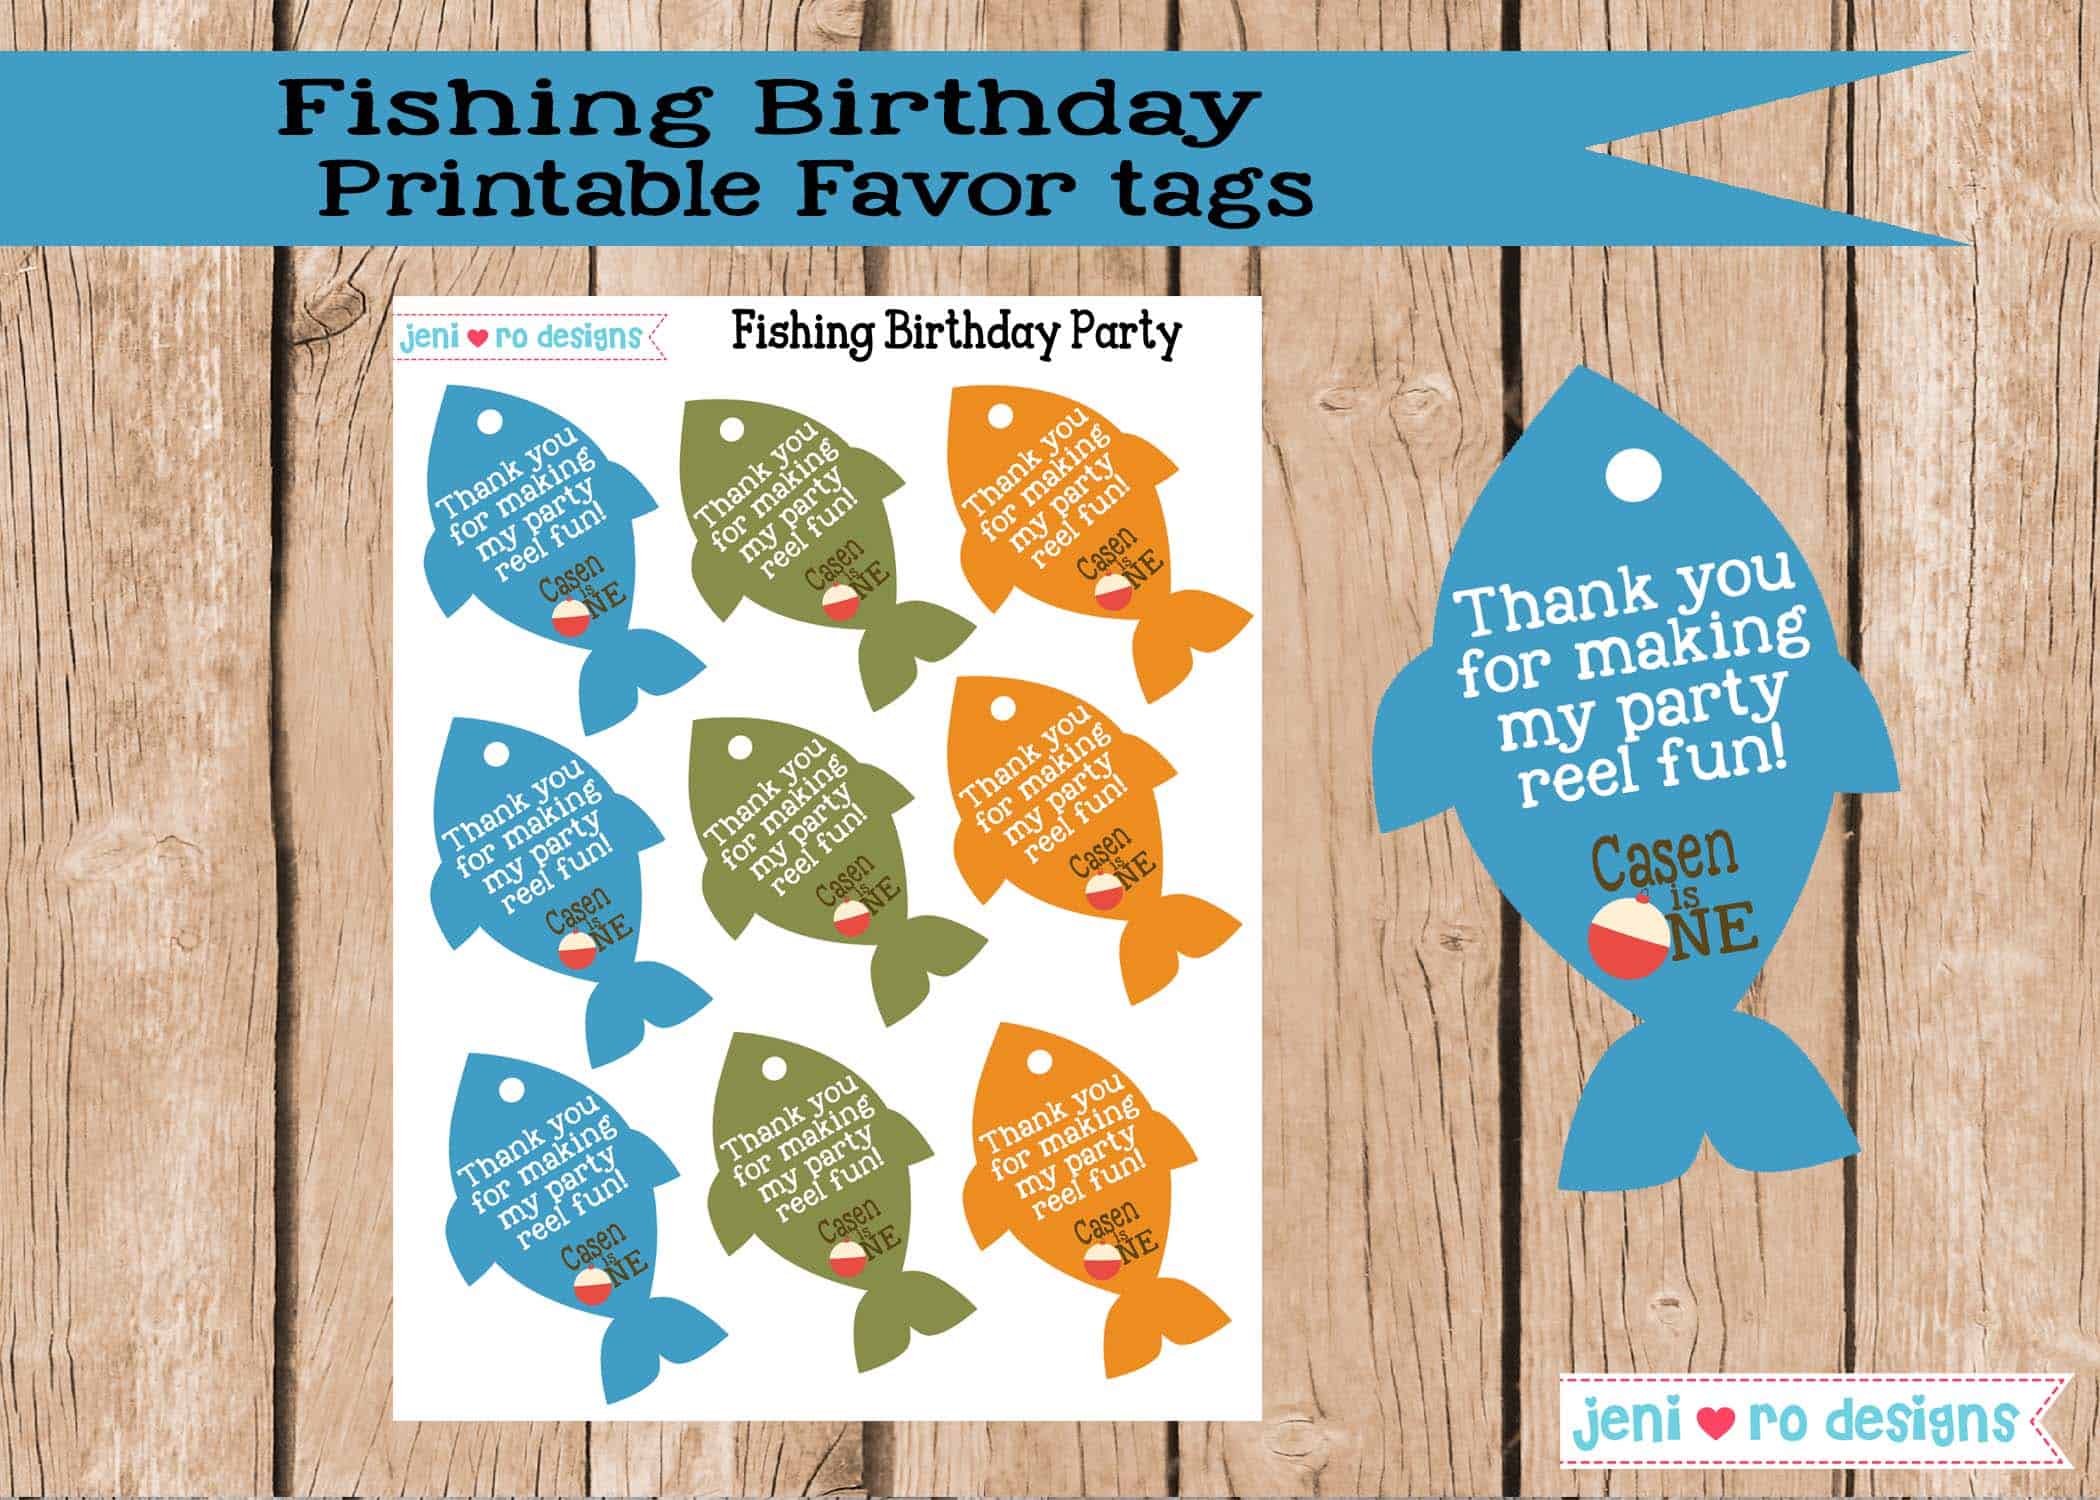 Fishing Birthday Party Goodie Bags - Fishing Birthday Party Favors -  Fishing Birthday Party Bag Tags - Fishing First Birthday Party Favors